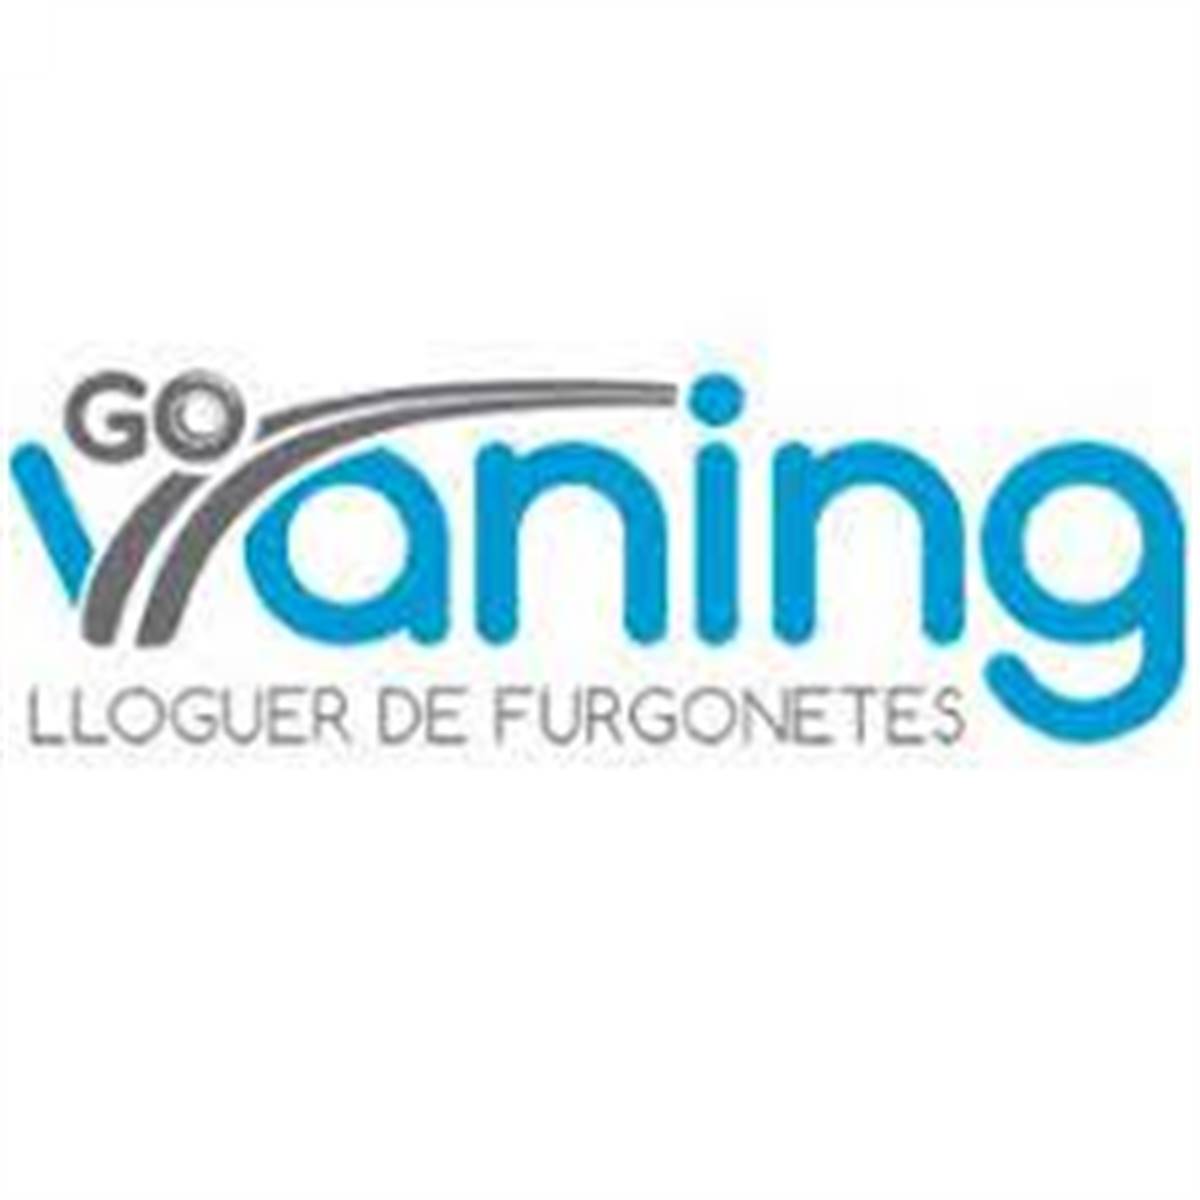 Go Vaning